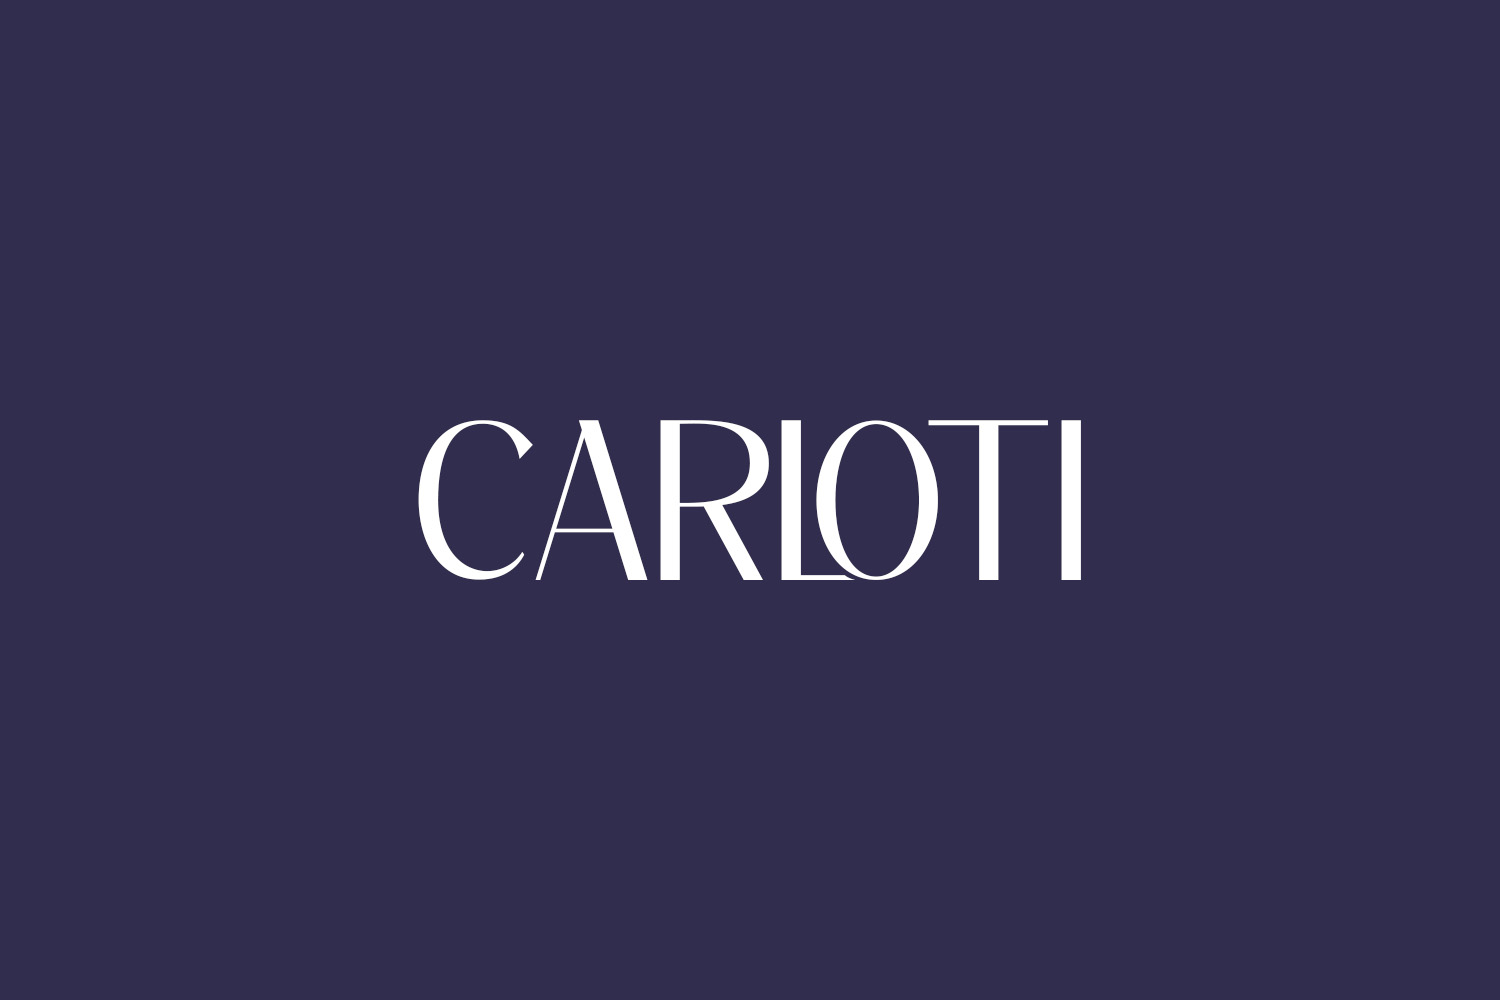 Carloti Free Font